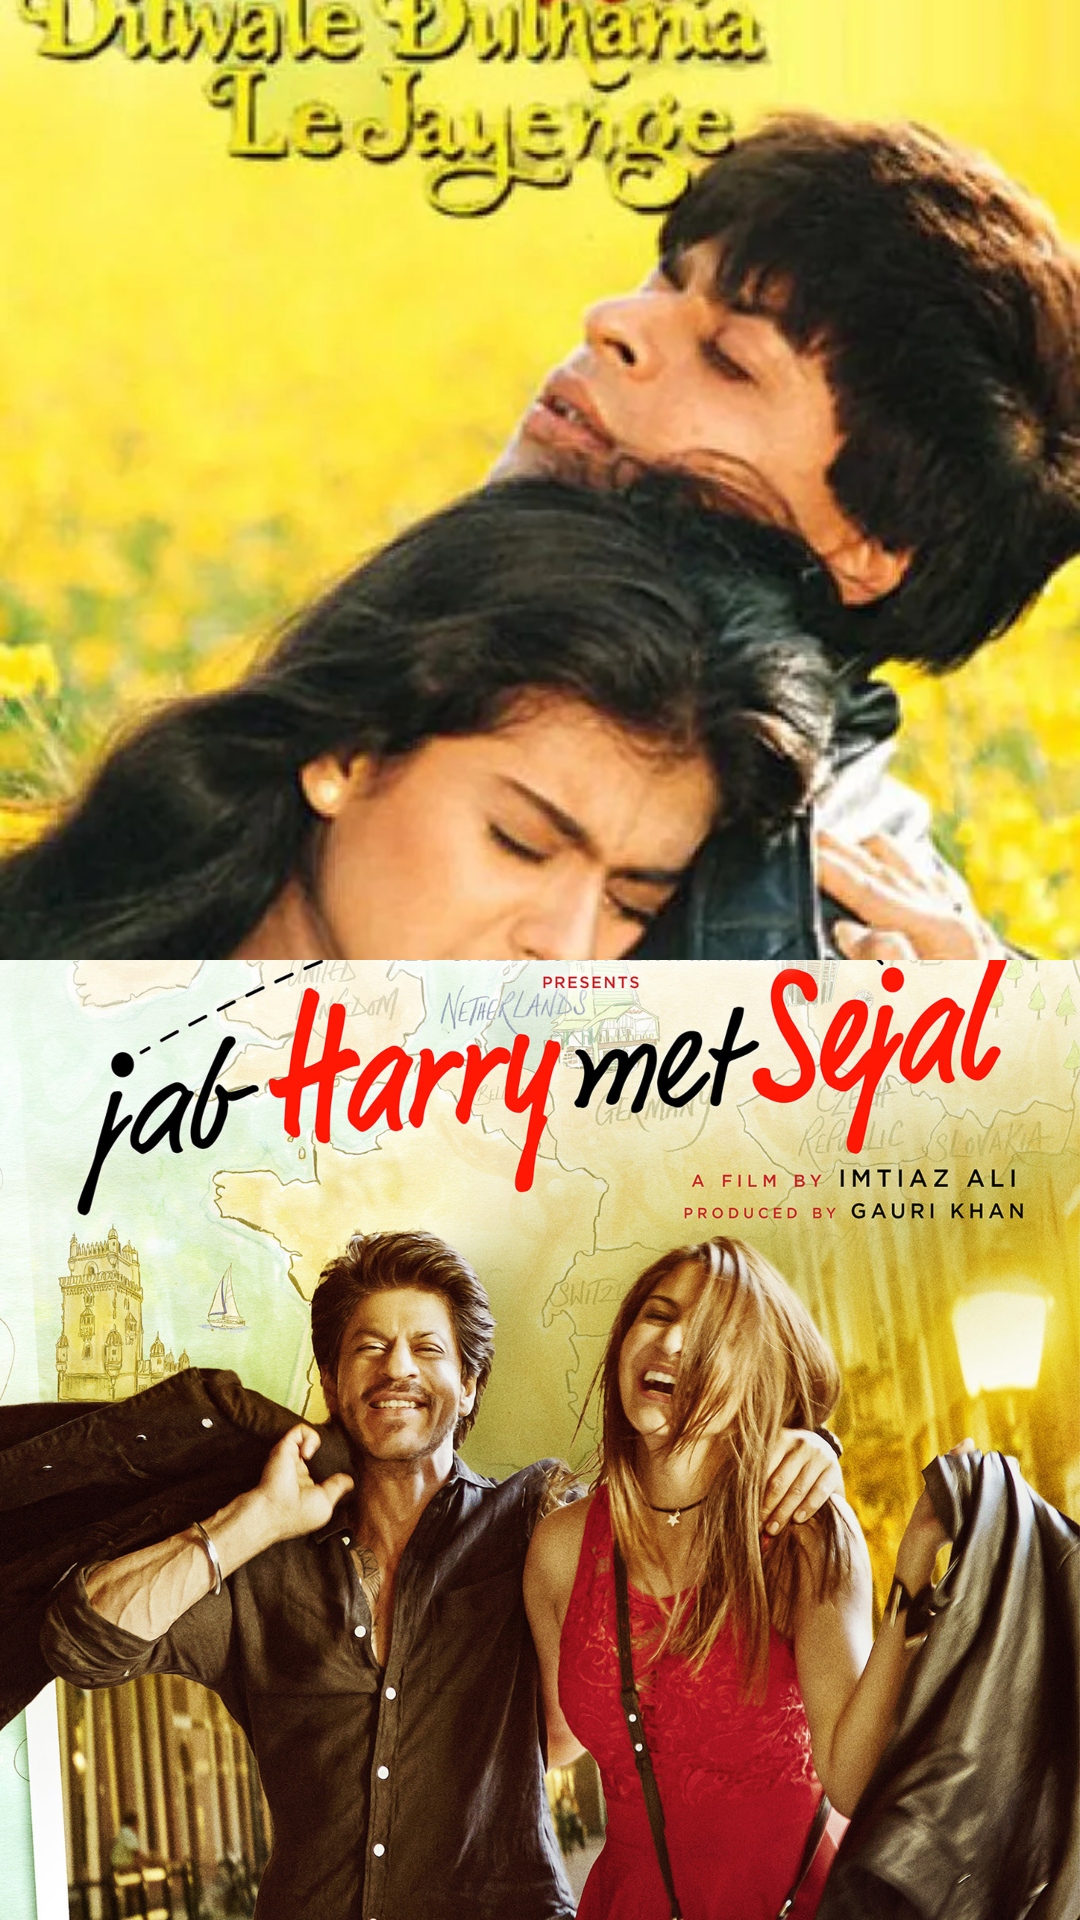 From Dilwale Dulhaniya Le Jayenge to Jab Harry Met Sejal: Shah Rukh Khan's romantic songs